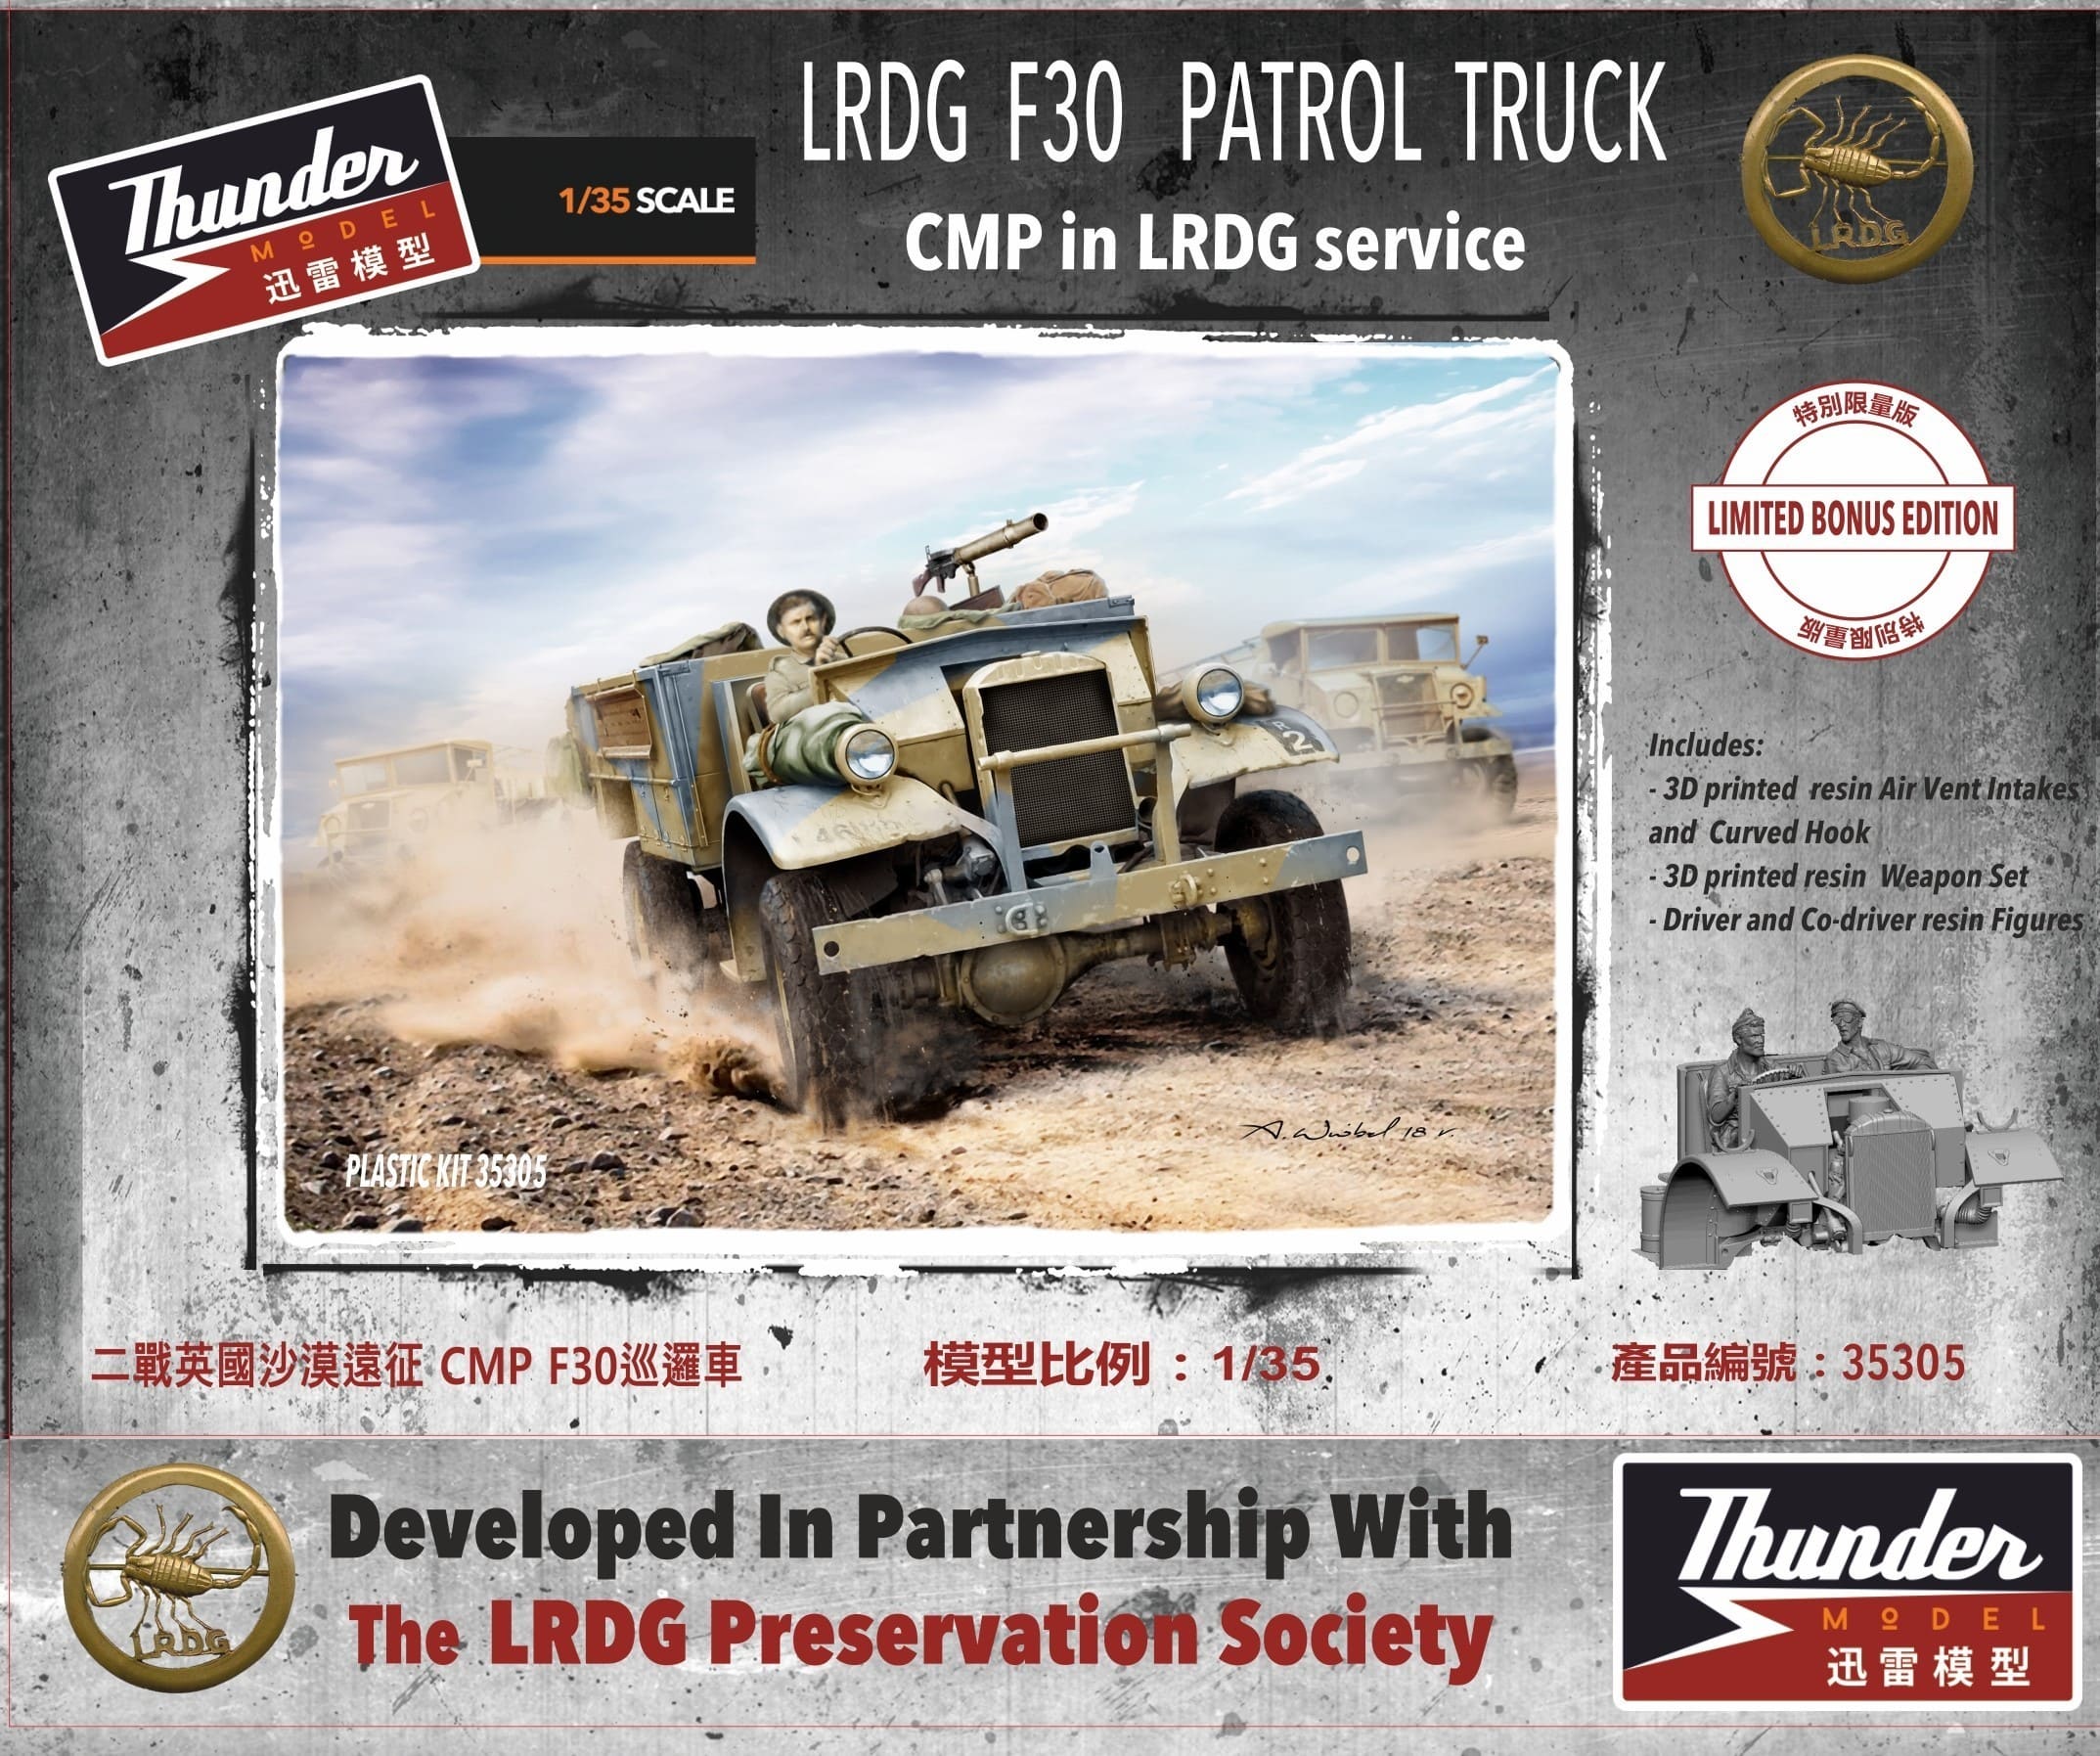 TM35305  техника и вооружение  LRDG F30 Patrol Truck Limited Bonus Edition  (1:35)